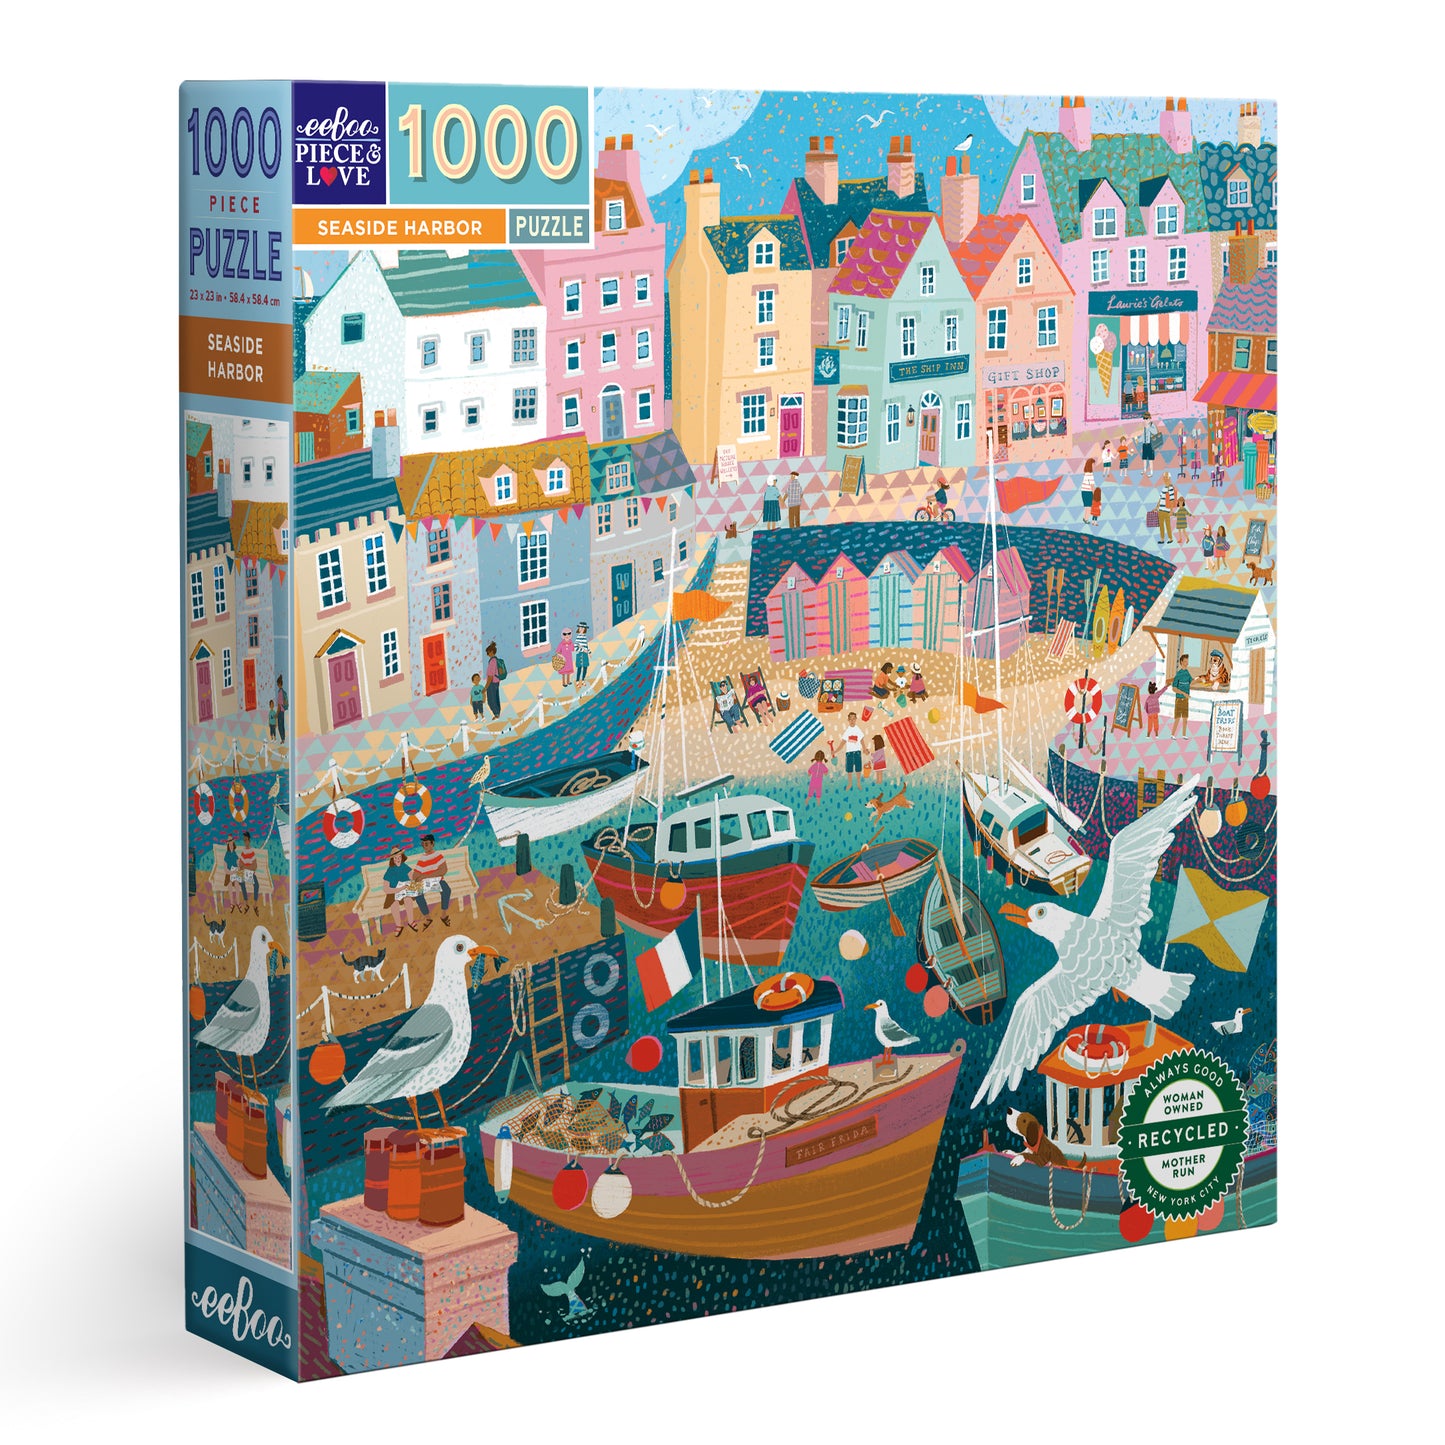 Seaside Boat Harbor Village 1000 Piece Jigsaw Puzzle | eeBoo Piece & Love Unique Gifts for Women